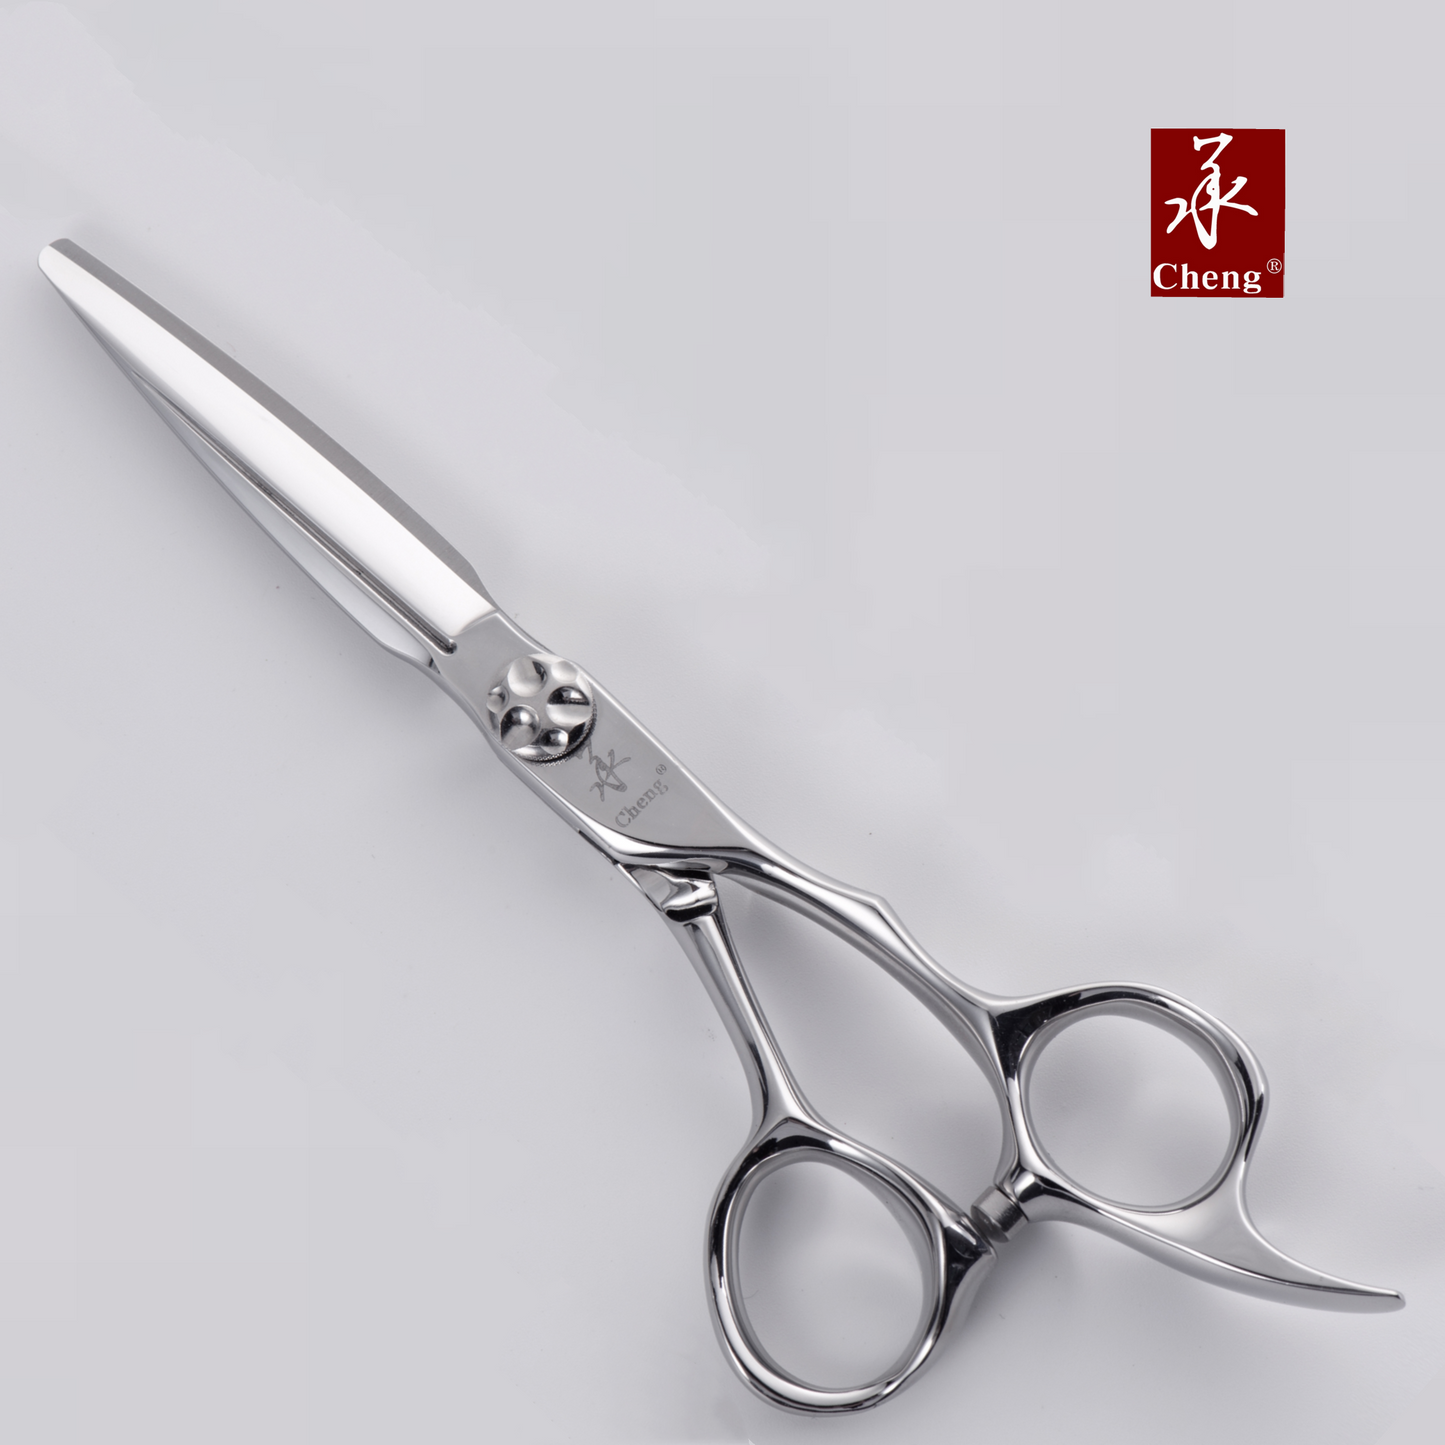 VD-675K Hair Cutting Scissors 6.75 Inch